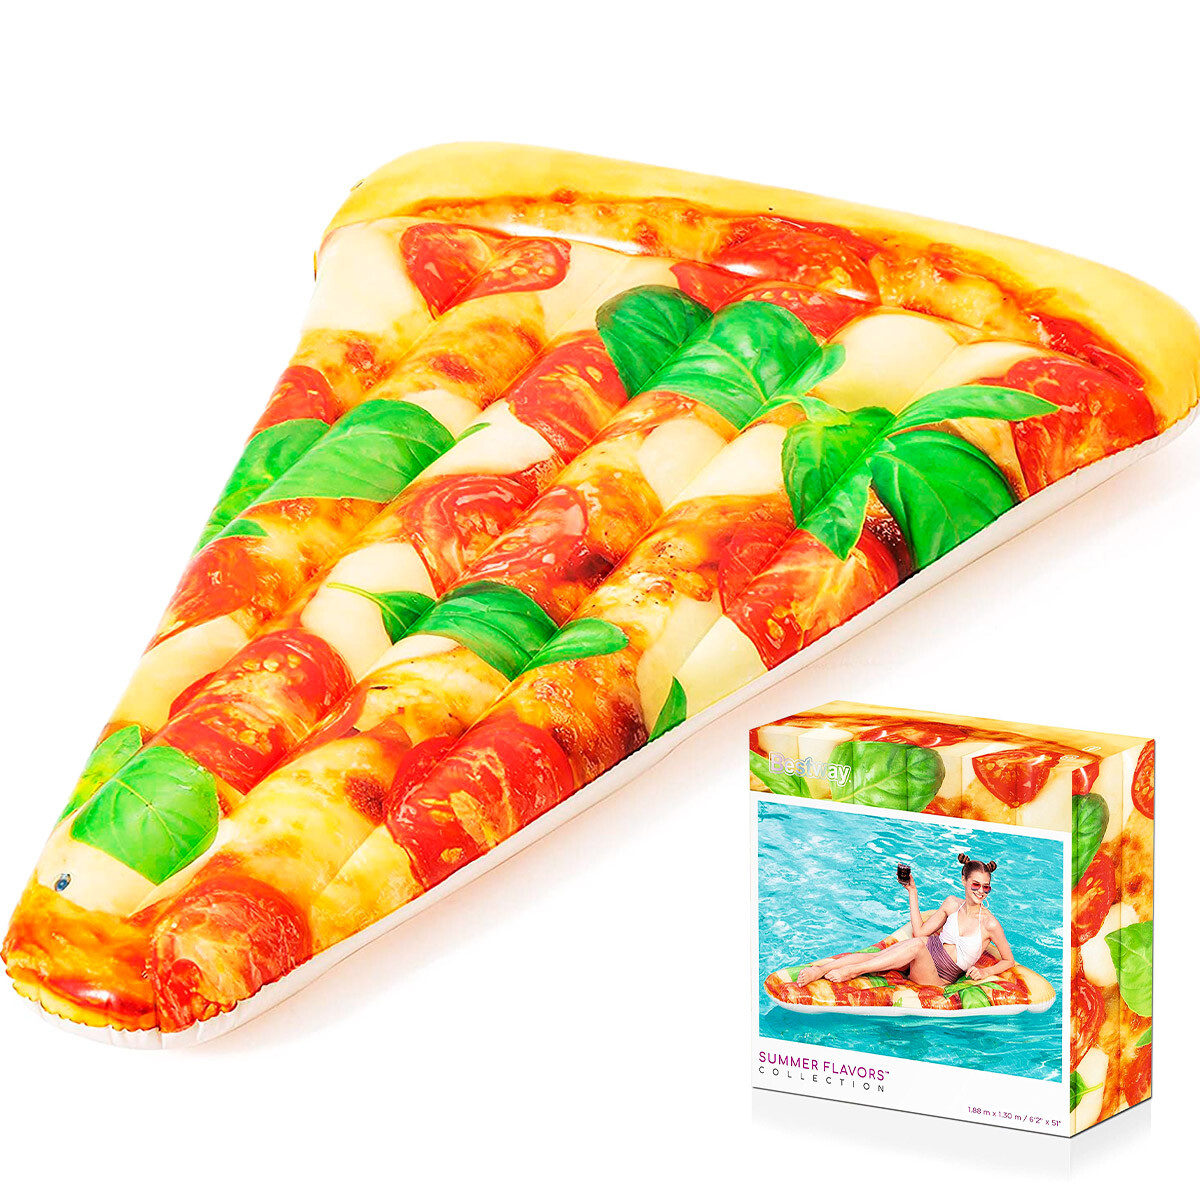 Colchoneta Bestway Inflable Pizza Para Piscina 188cm 